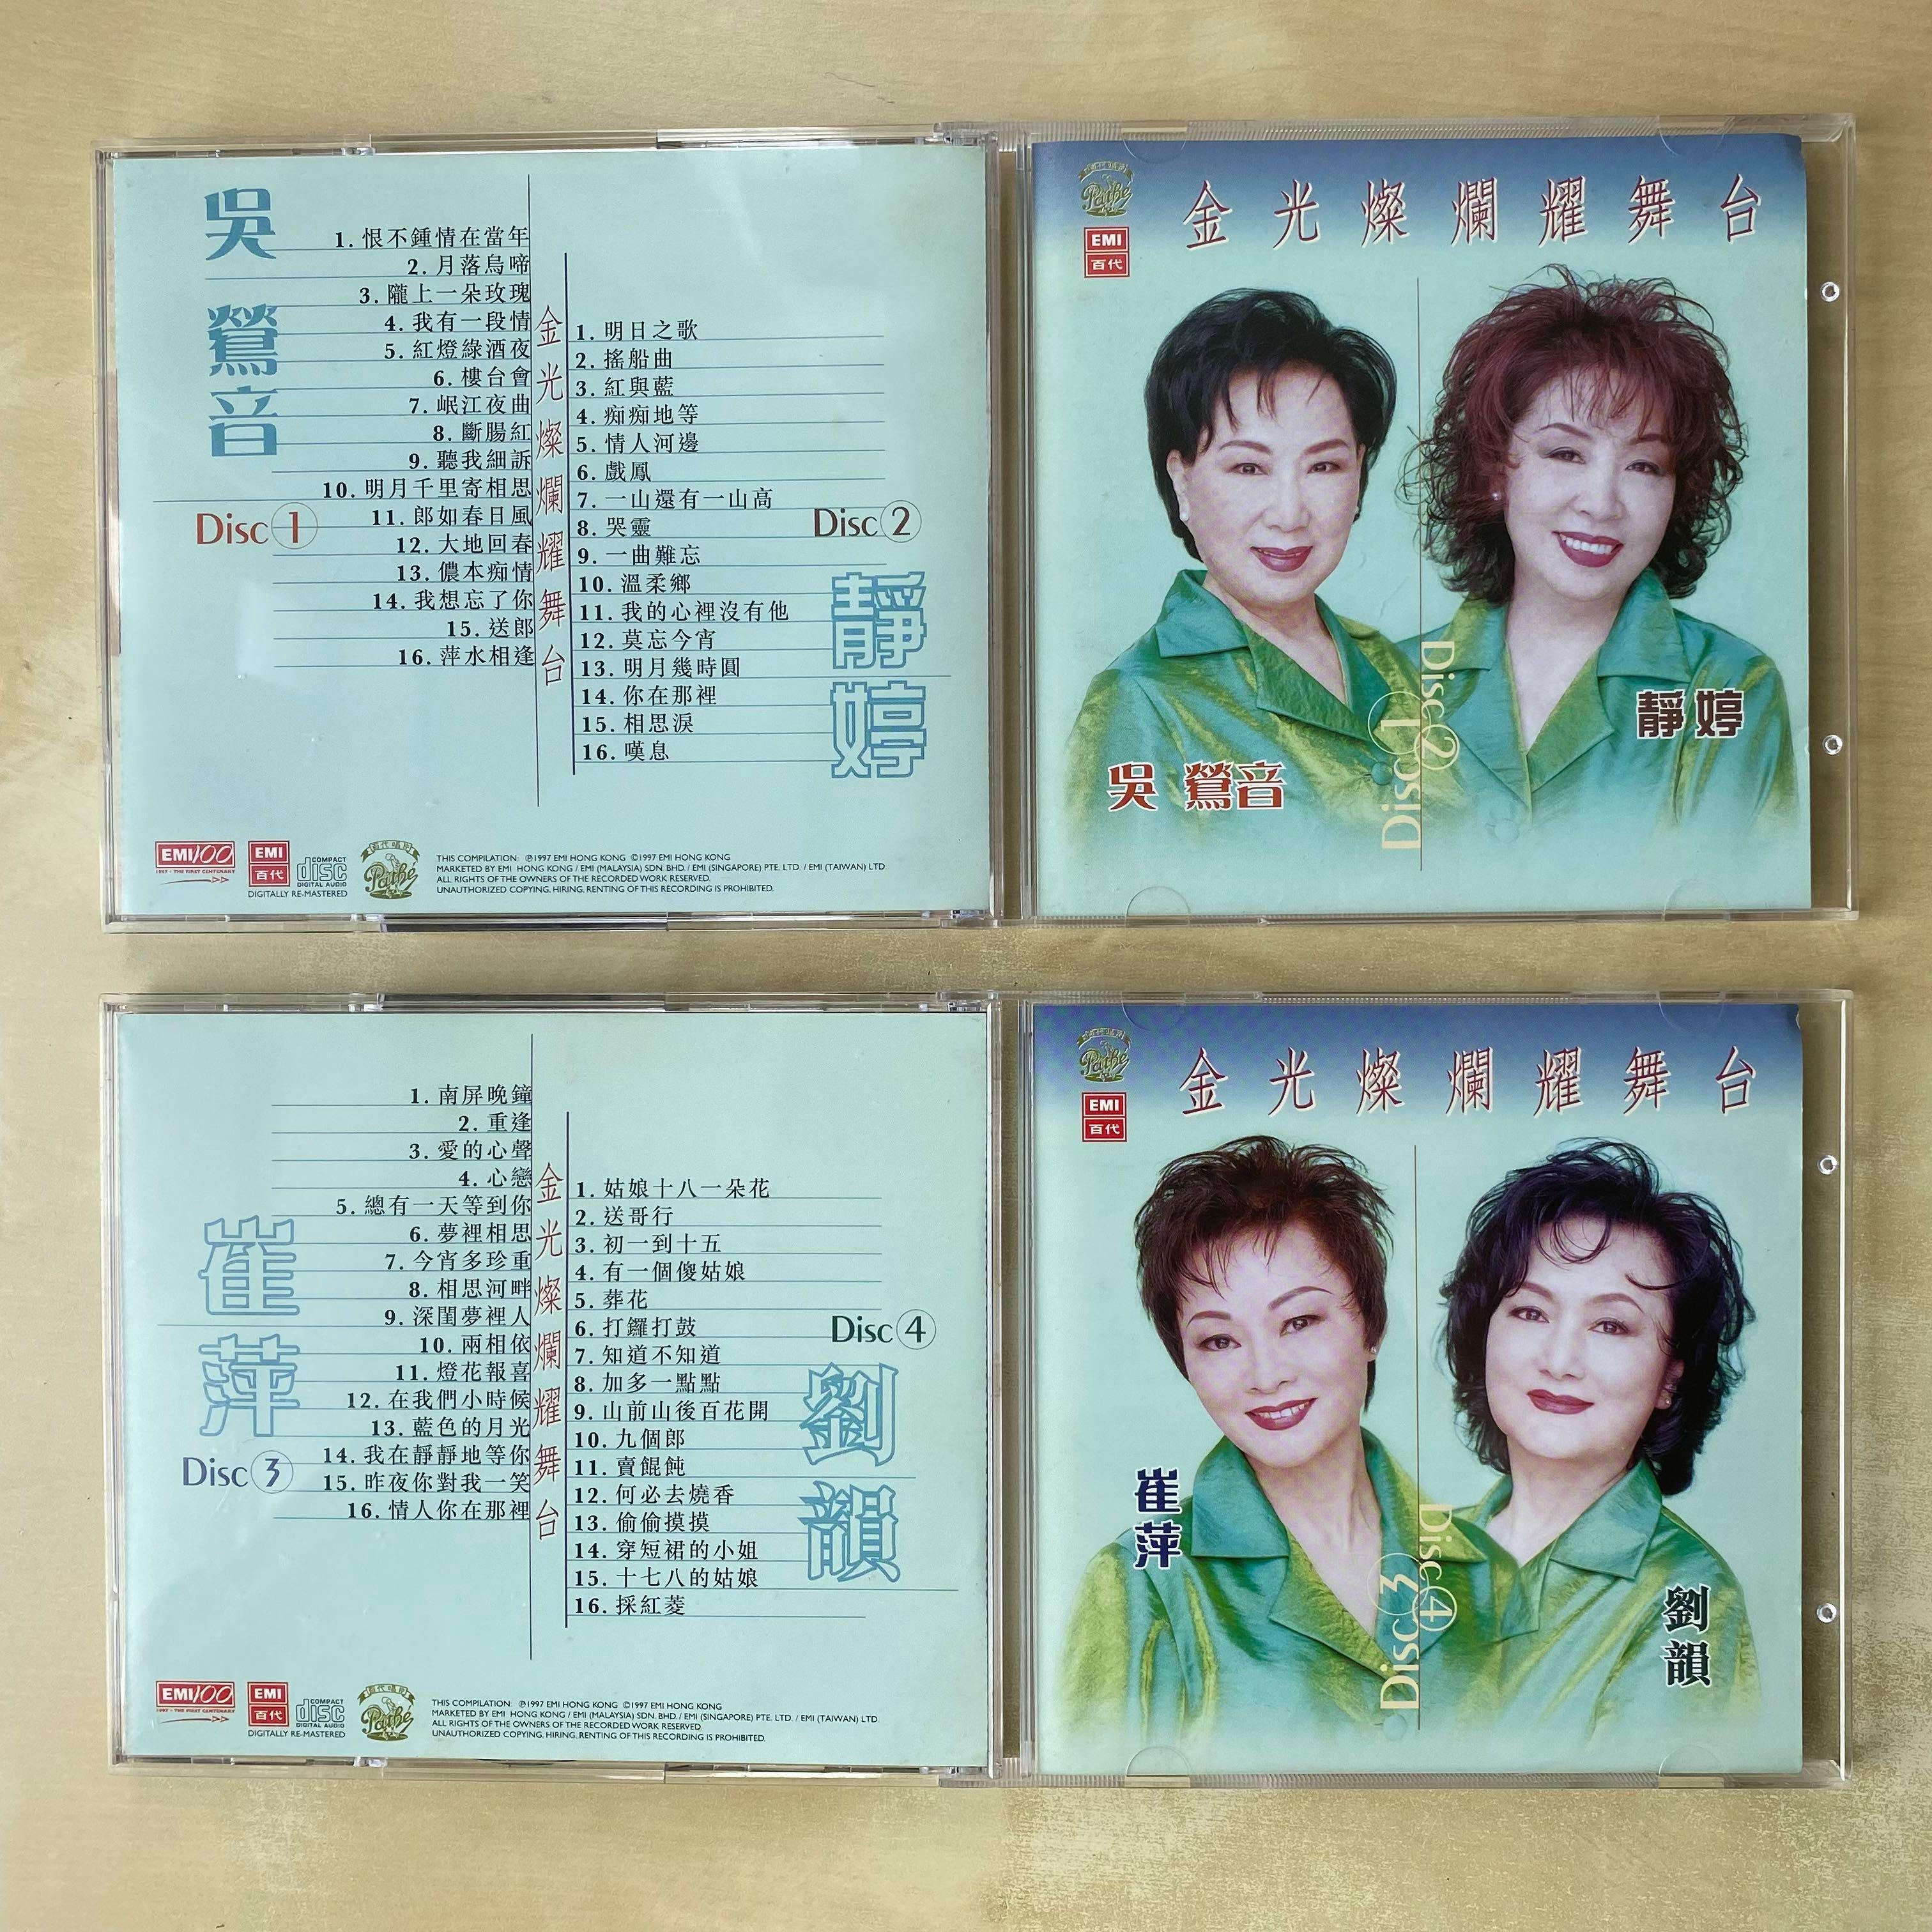 CD丨金光燦爛耀舞台吳鶯音靜婷崔萍劉韻(4CD), 興趣及遊戲, 音樂、樂器 